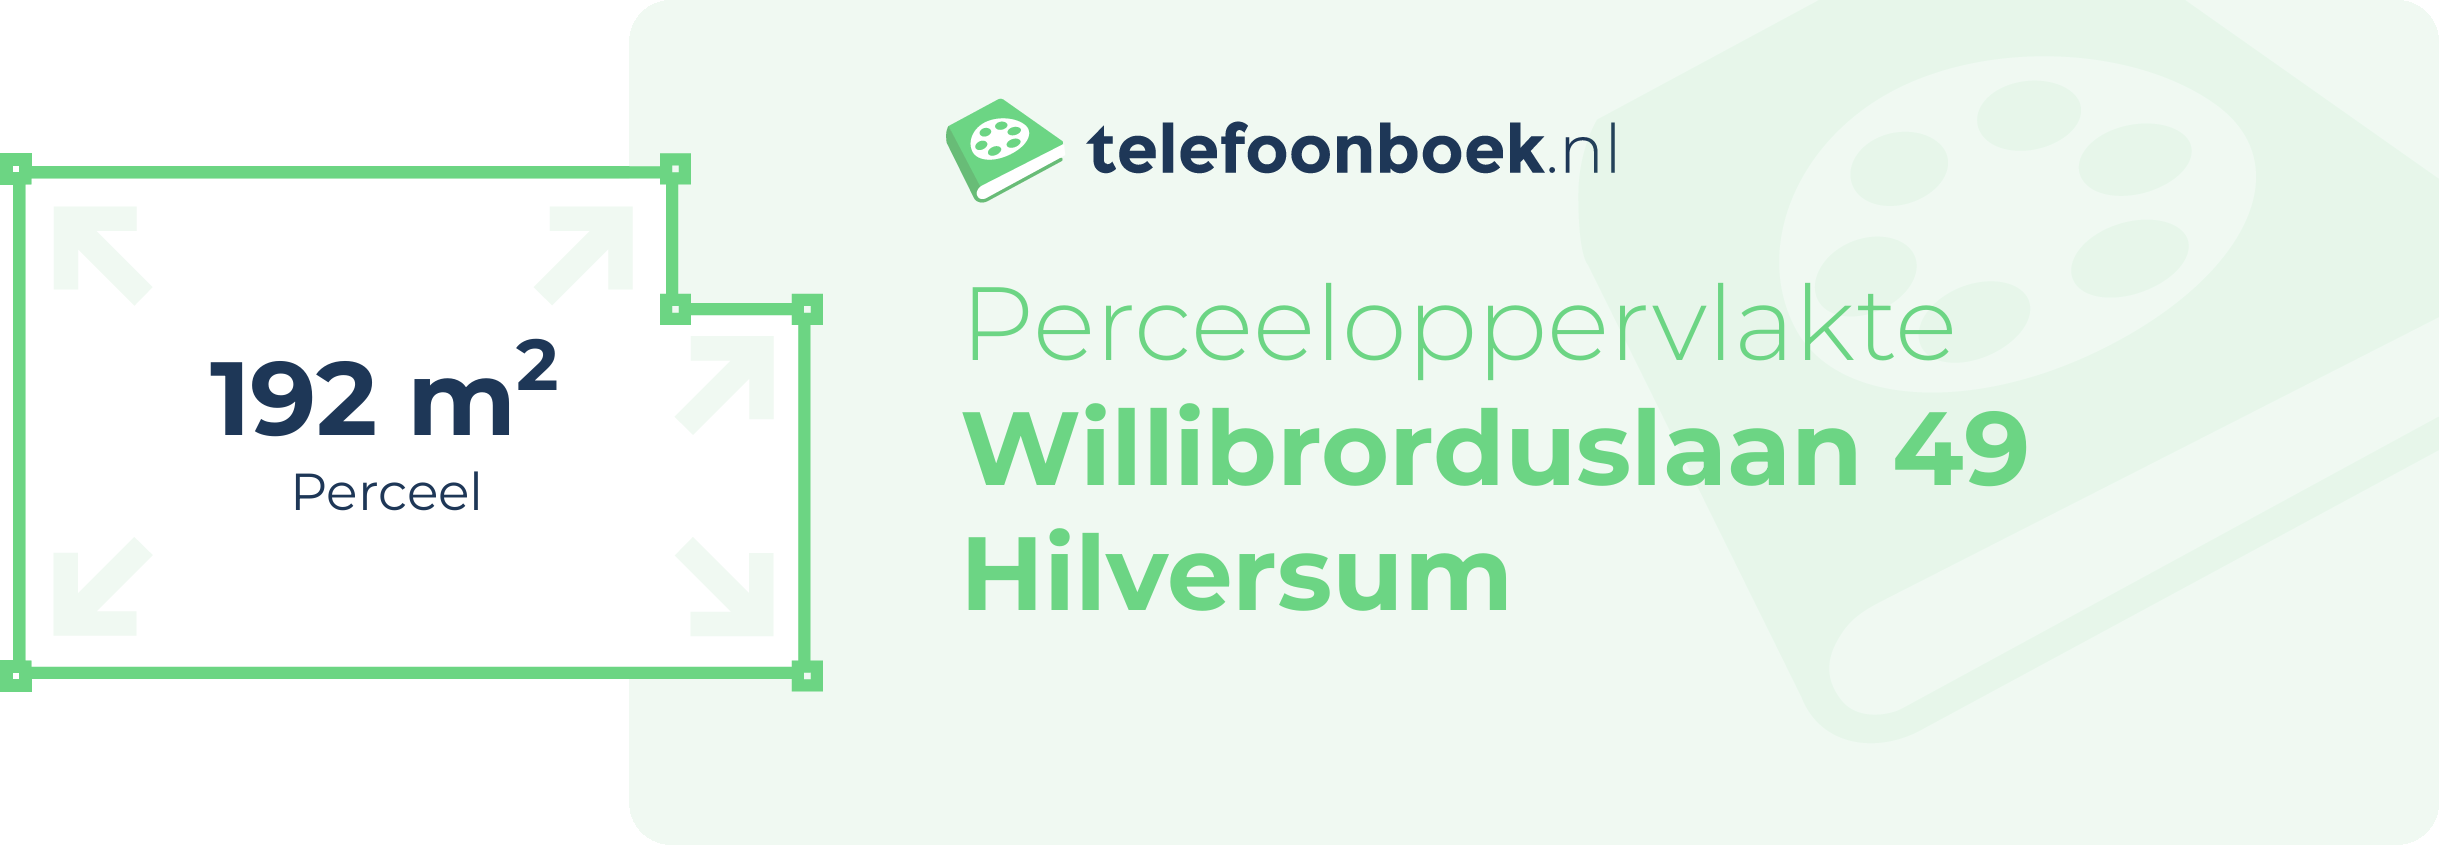 Perceeloppervlakte Willibrorduslaan 49 Hilversum